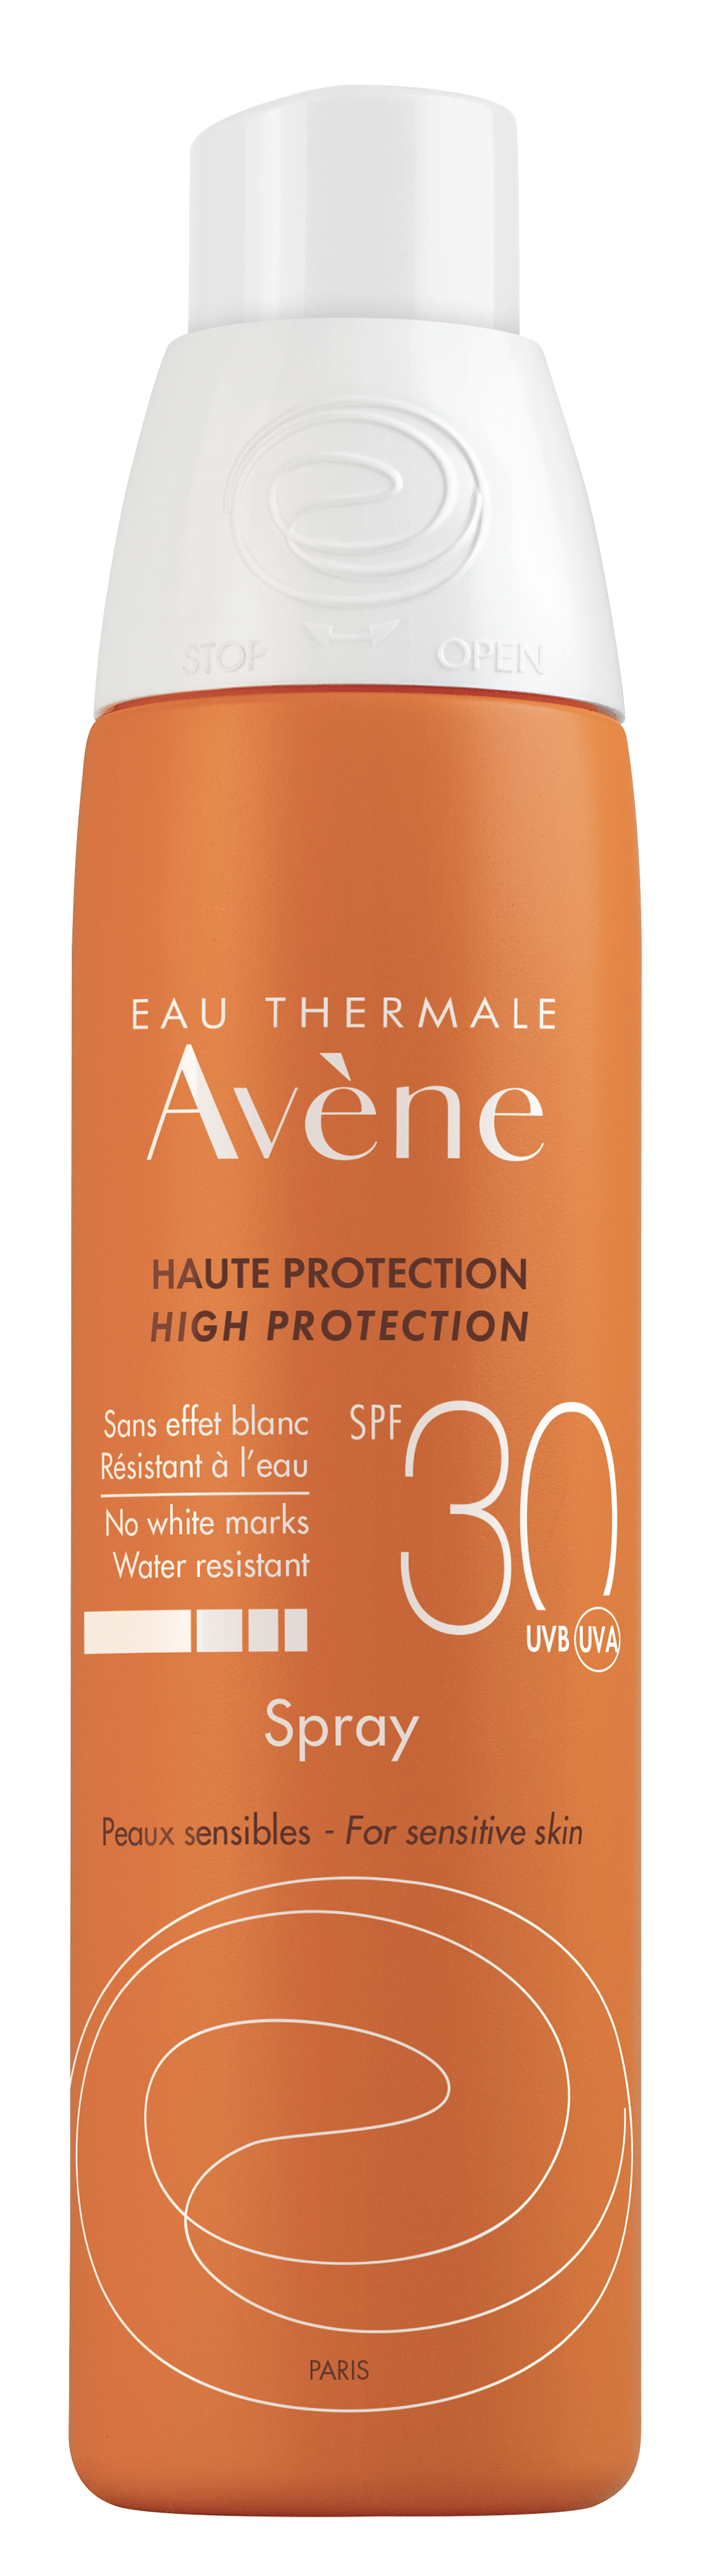 Avene High Protection spray spf30+ 200ml